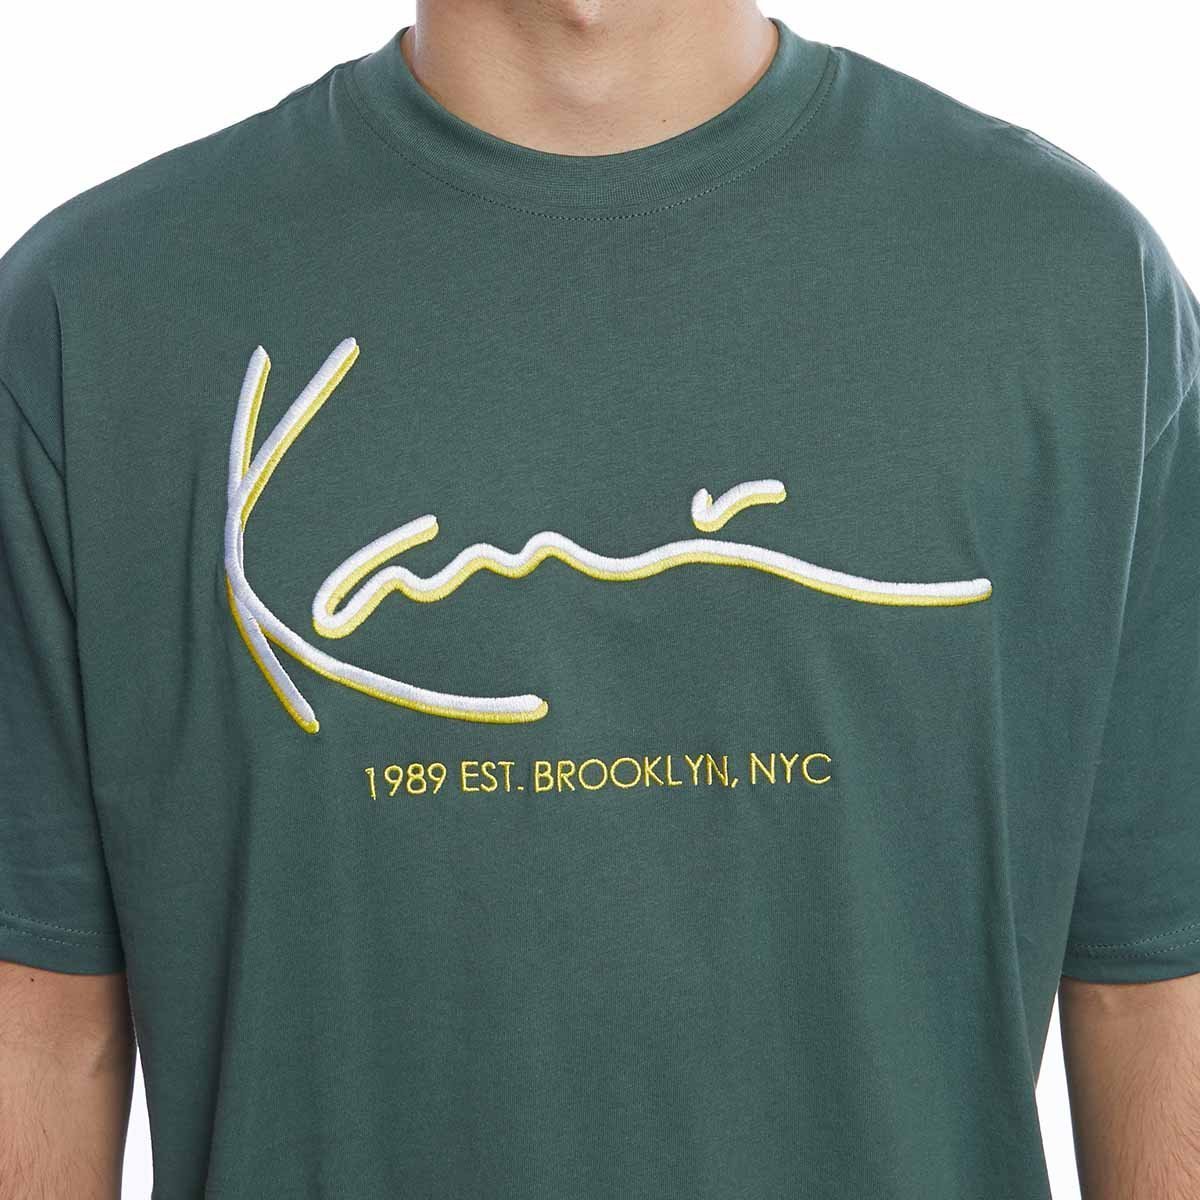 Karl Kani T-shirt Signature Tee green | Bludshop.com